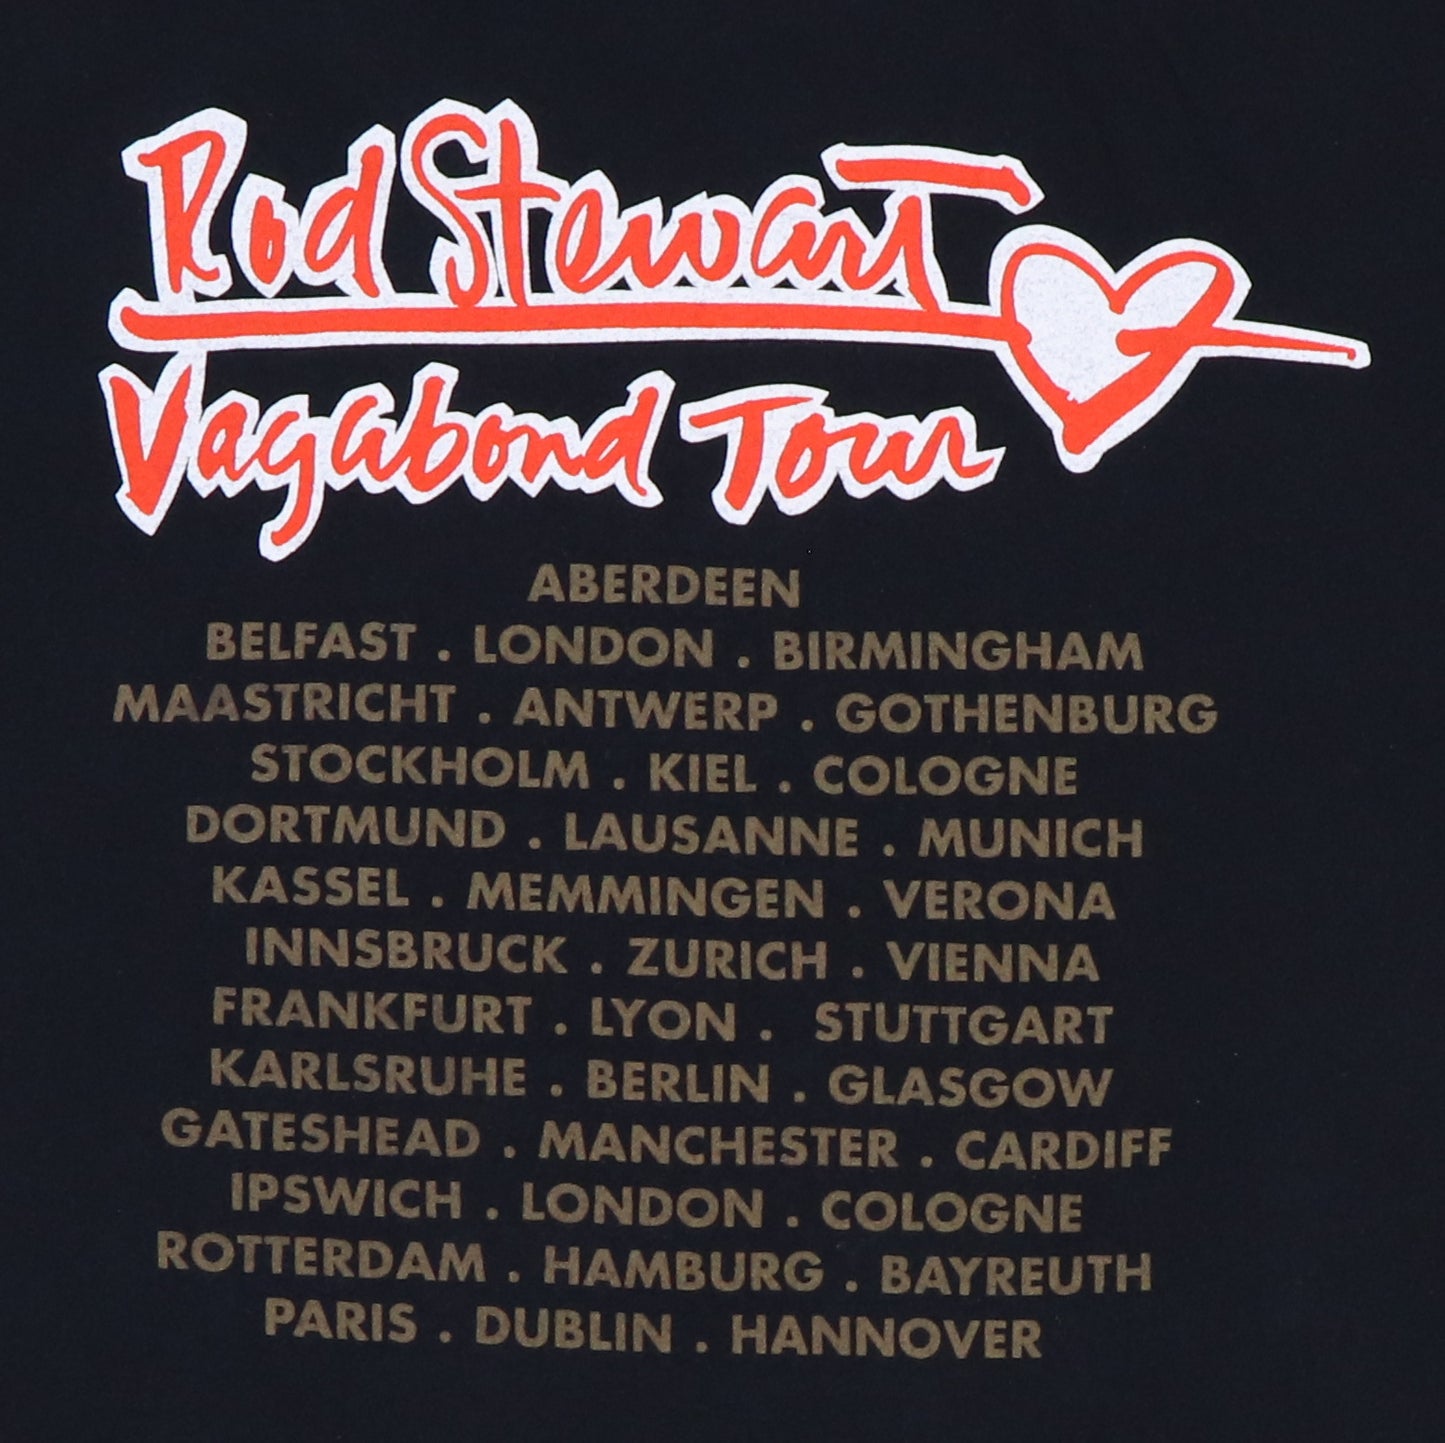 1991 Rod Stewart Vagabond Tour Shirt